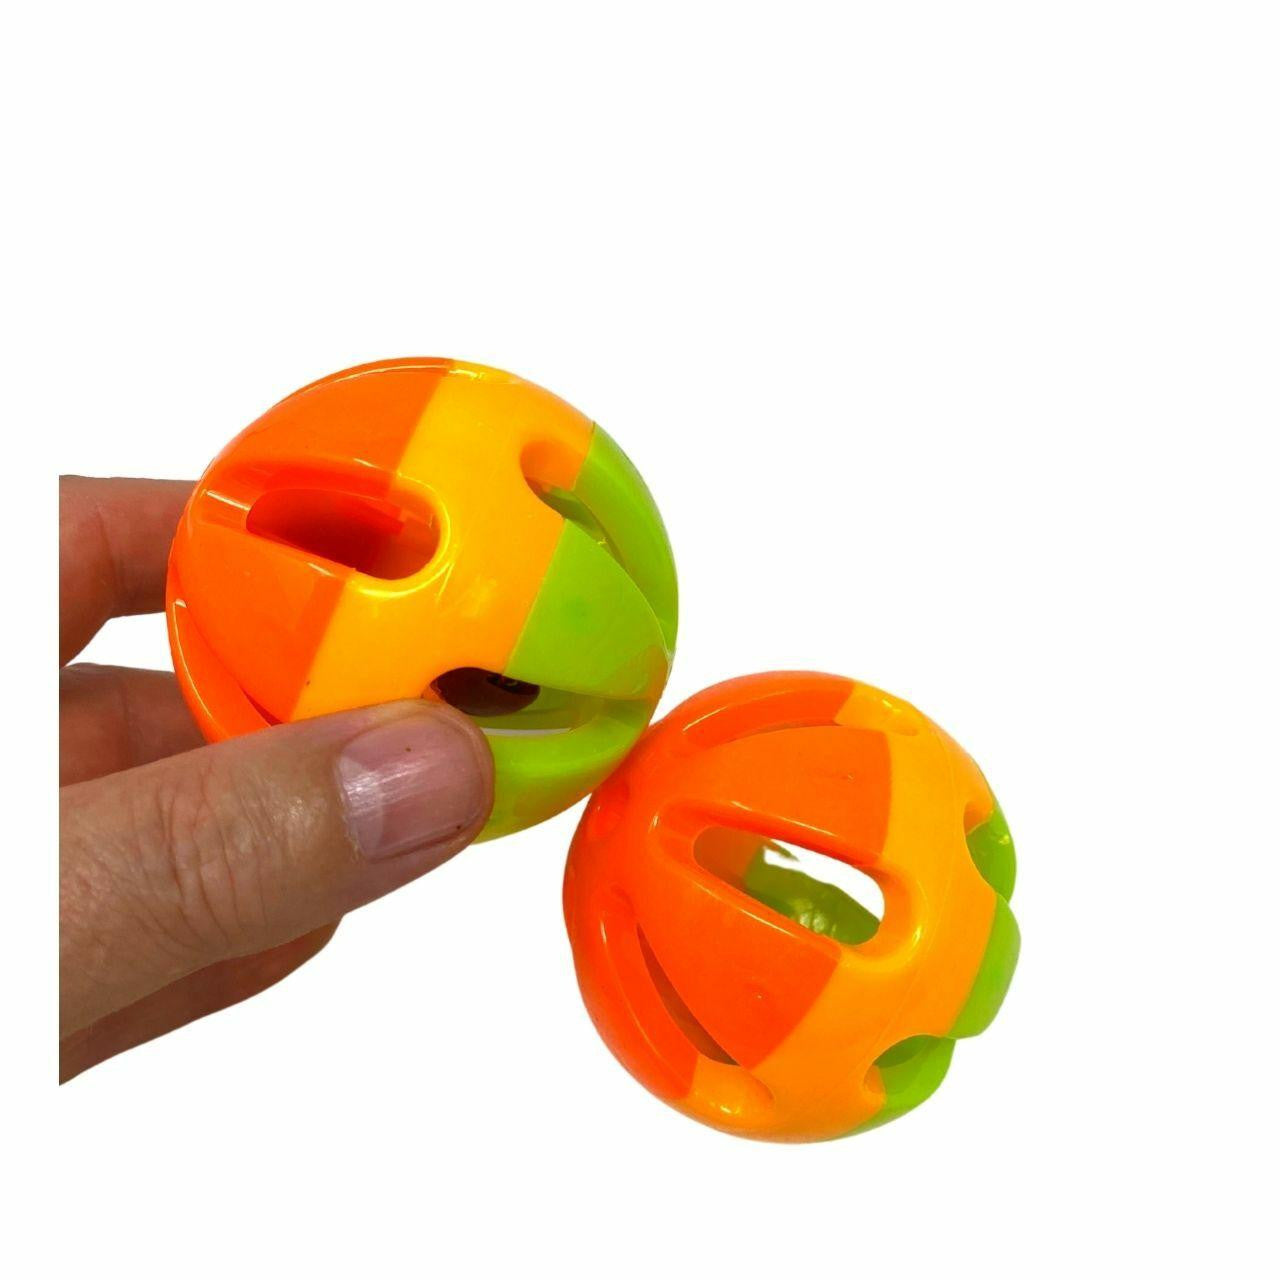 3730 Pk2 2.75-Inch Soccer Balls